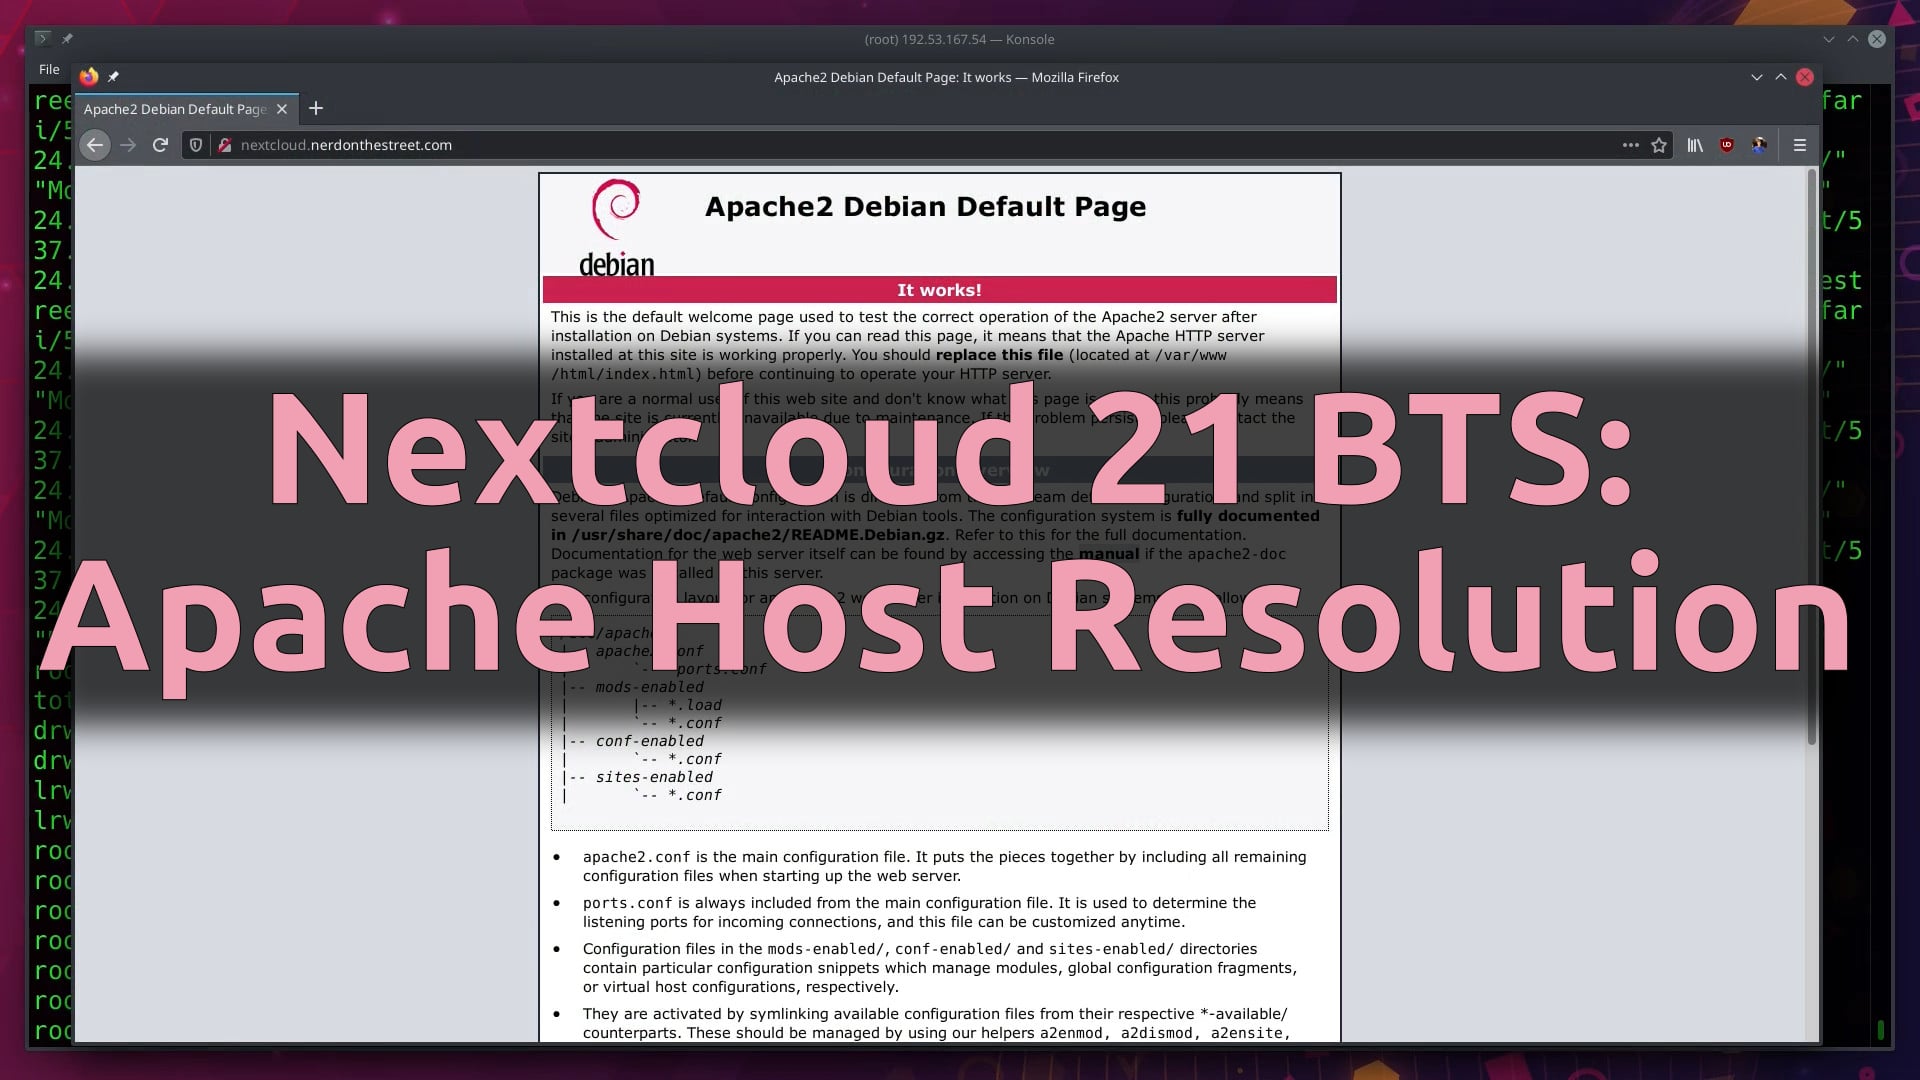 Nextcloud 21 BTS: Apache Host Resolution